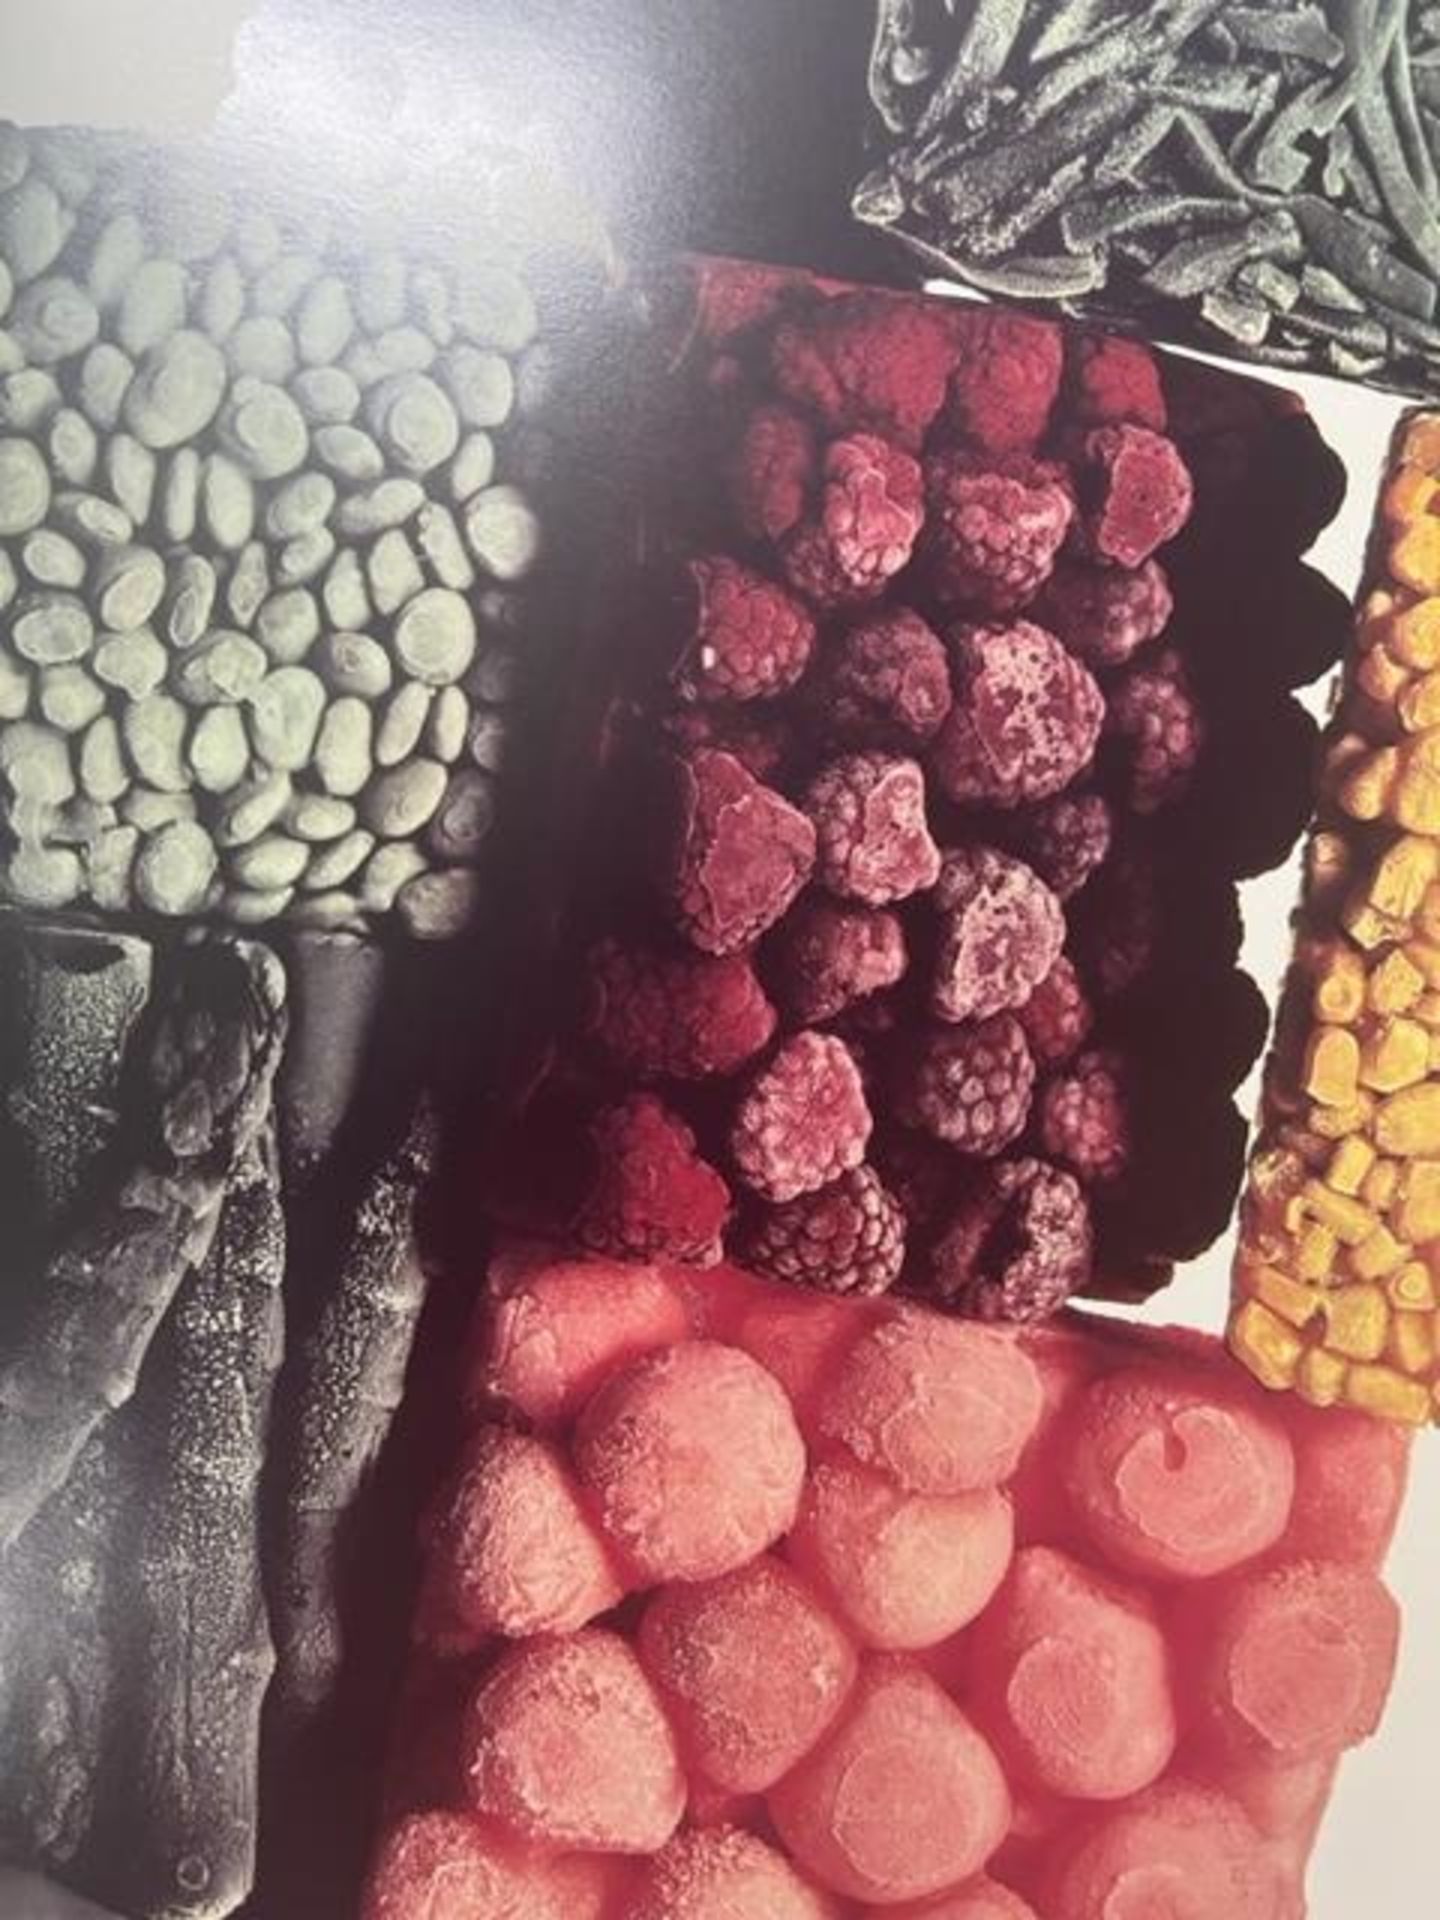 Irving Penn "Frozen Foods" Print. - Image 6 of 6